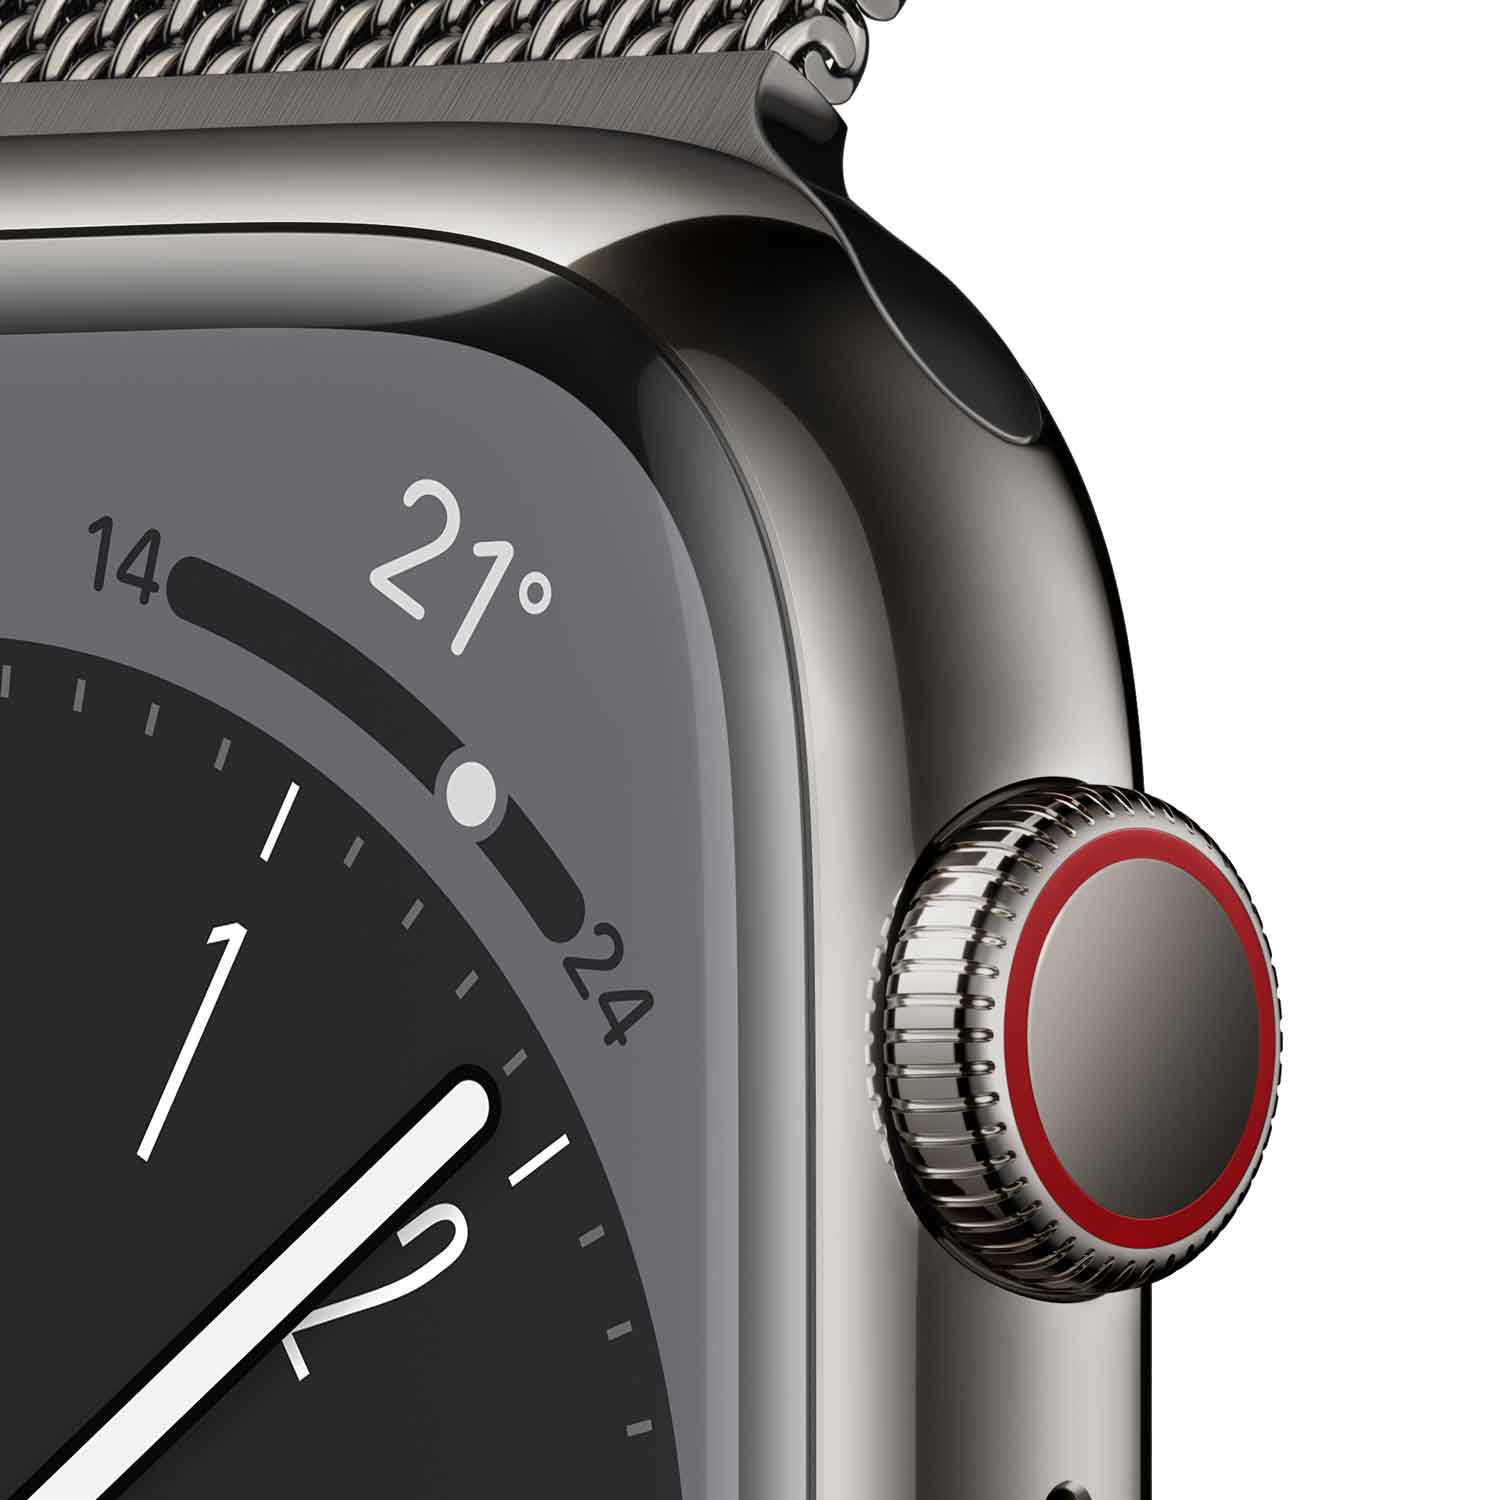 Apple Watch S8 Edelstahl Cellular 41mm Graphit (Milanaise graphit)